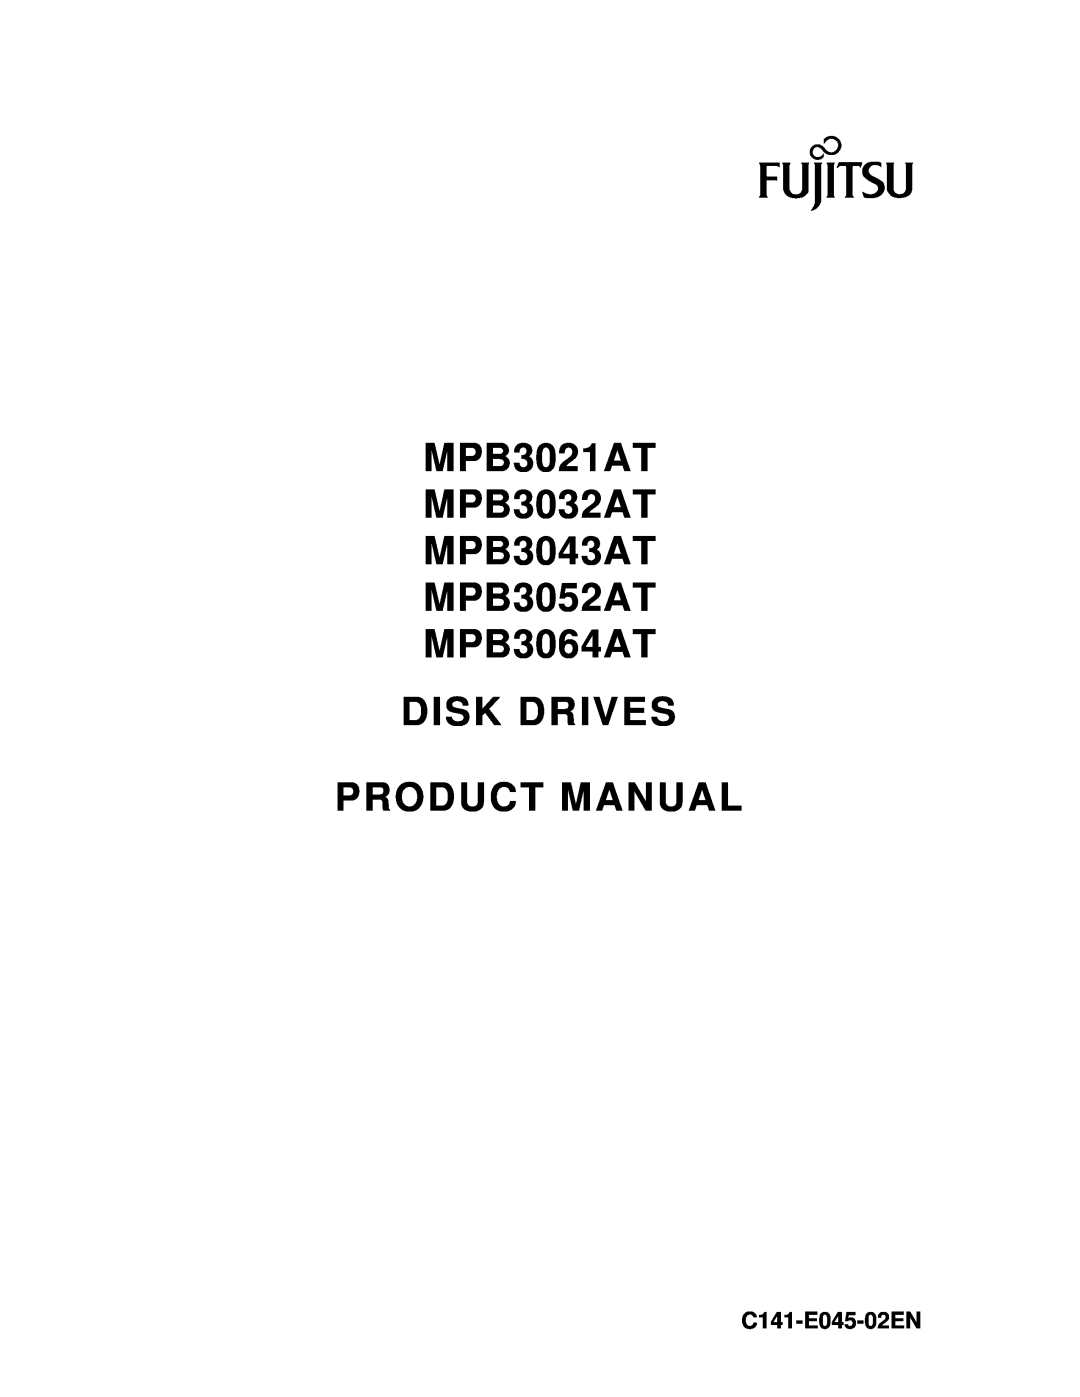 Fujitsu MPB3054AT manual MPB3021AT MPB3032AT MPB3043AT MPB3052AT MPB3064AT DISK DRIVES, Product Manual, C141-E045-02EN 